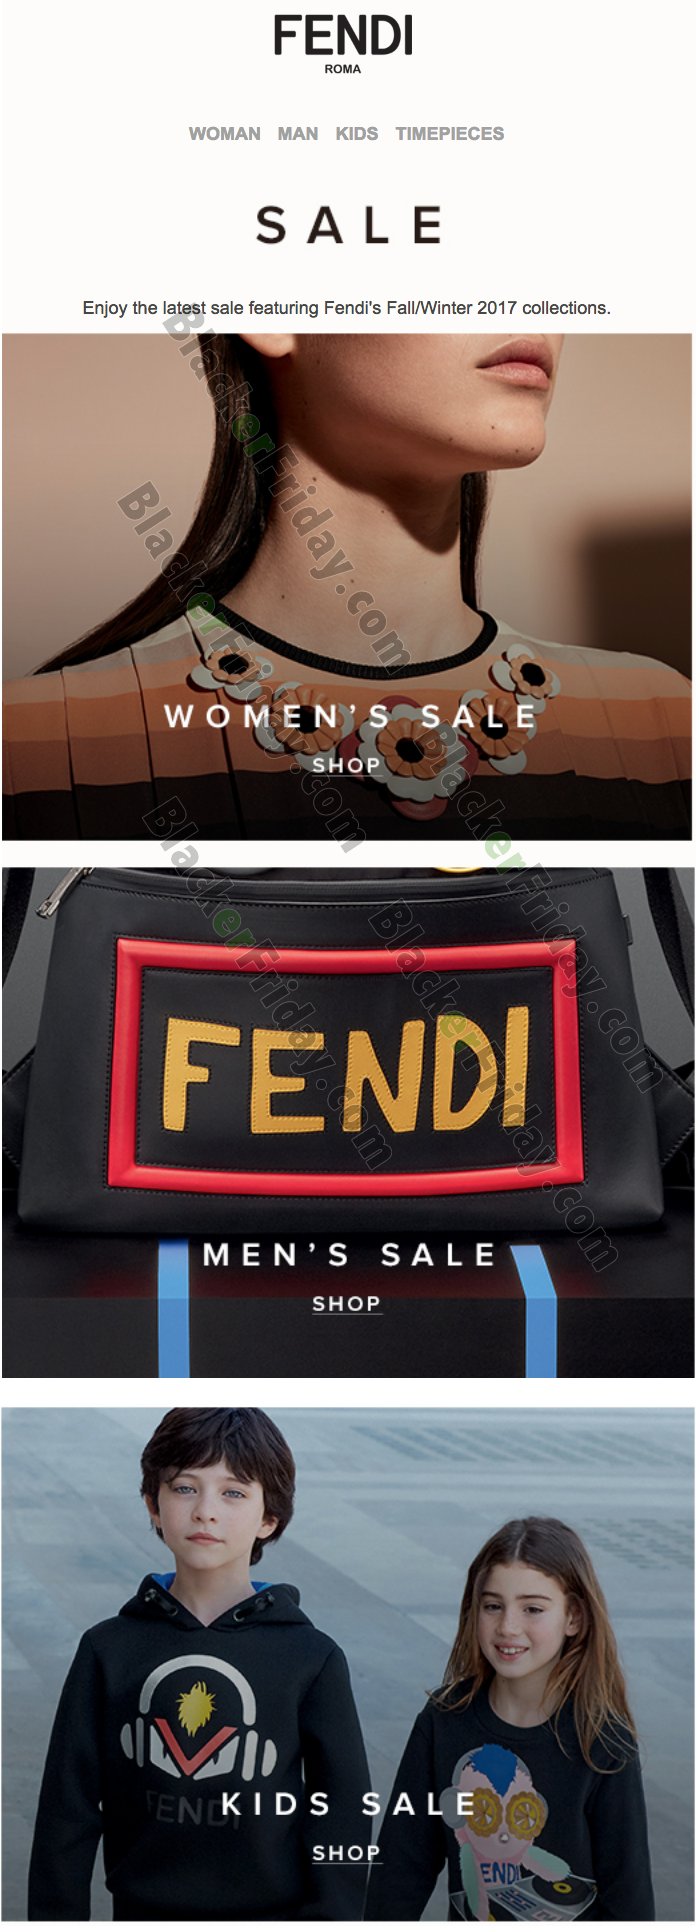 Fendi Black Friday 2021 Sale - What to 